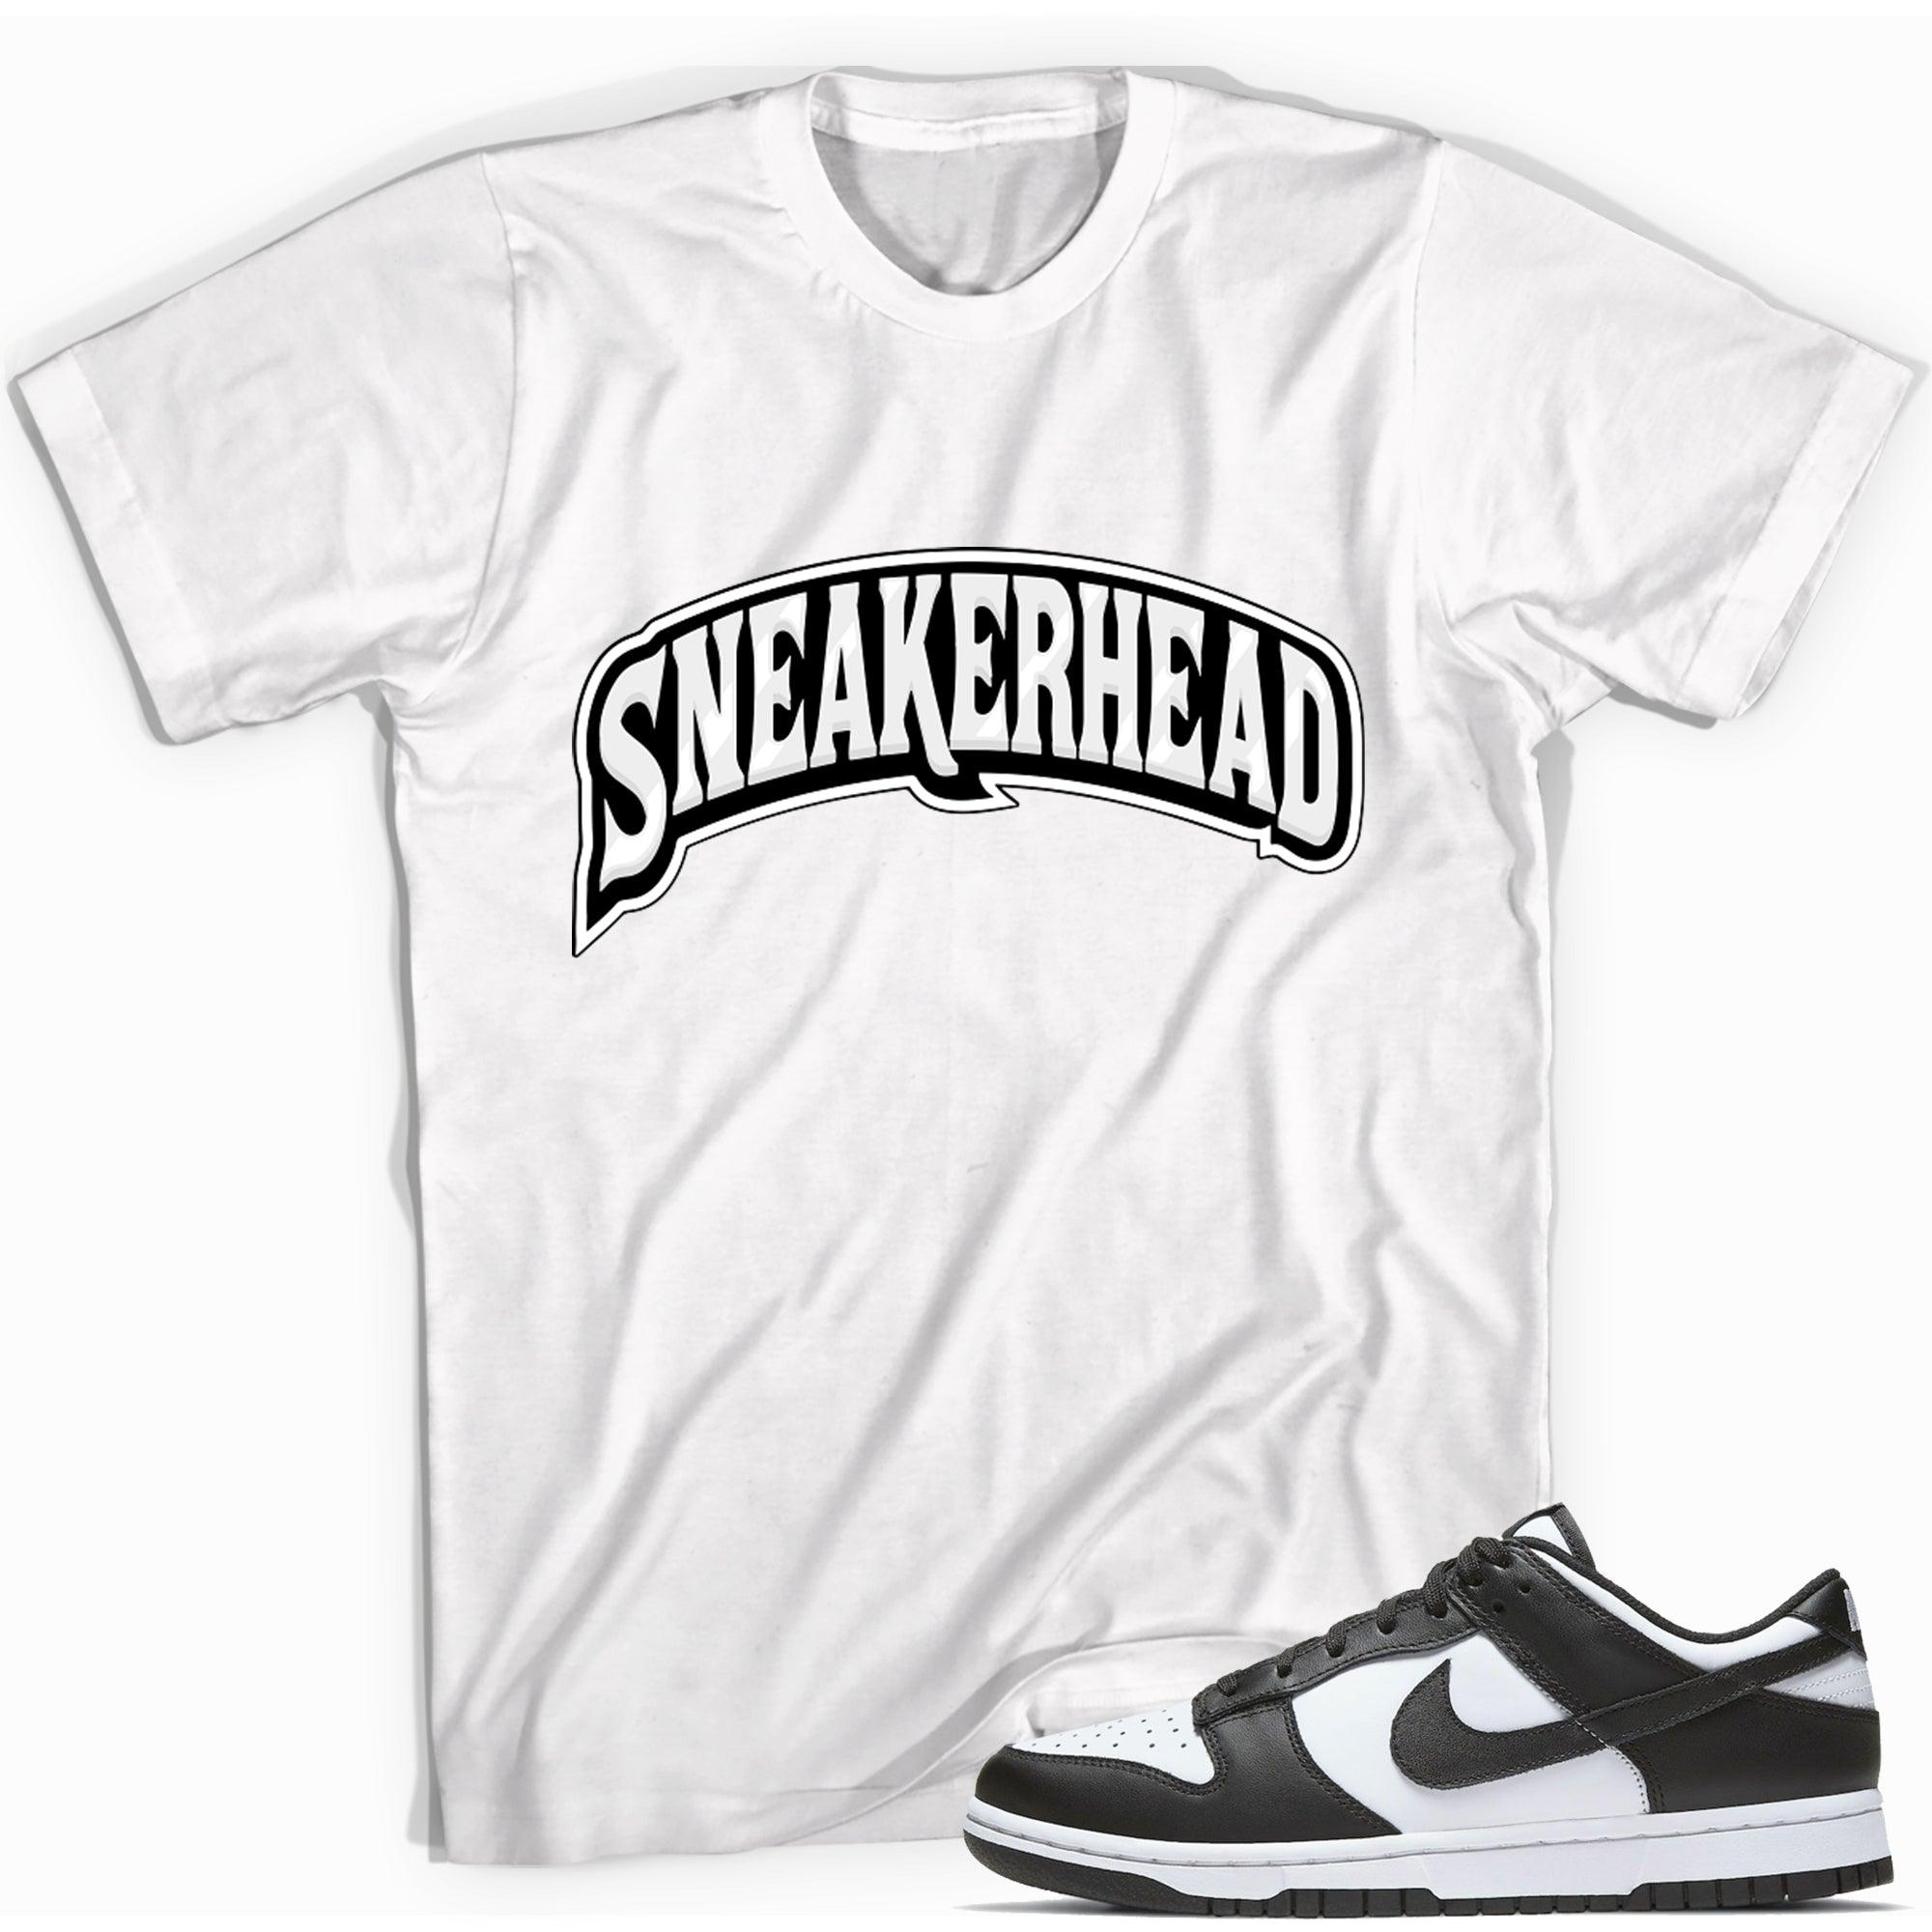 Sneakerhead Shirt Dunk Low Retro White Black Sneakers photo